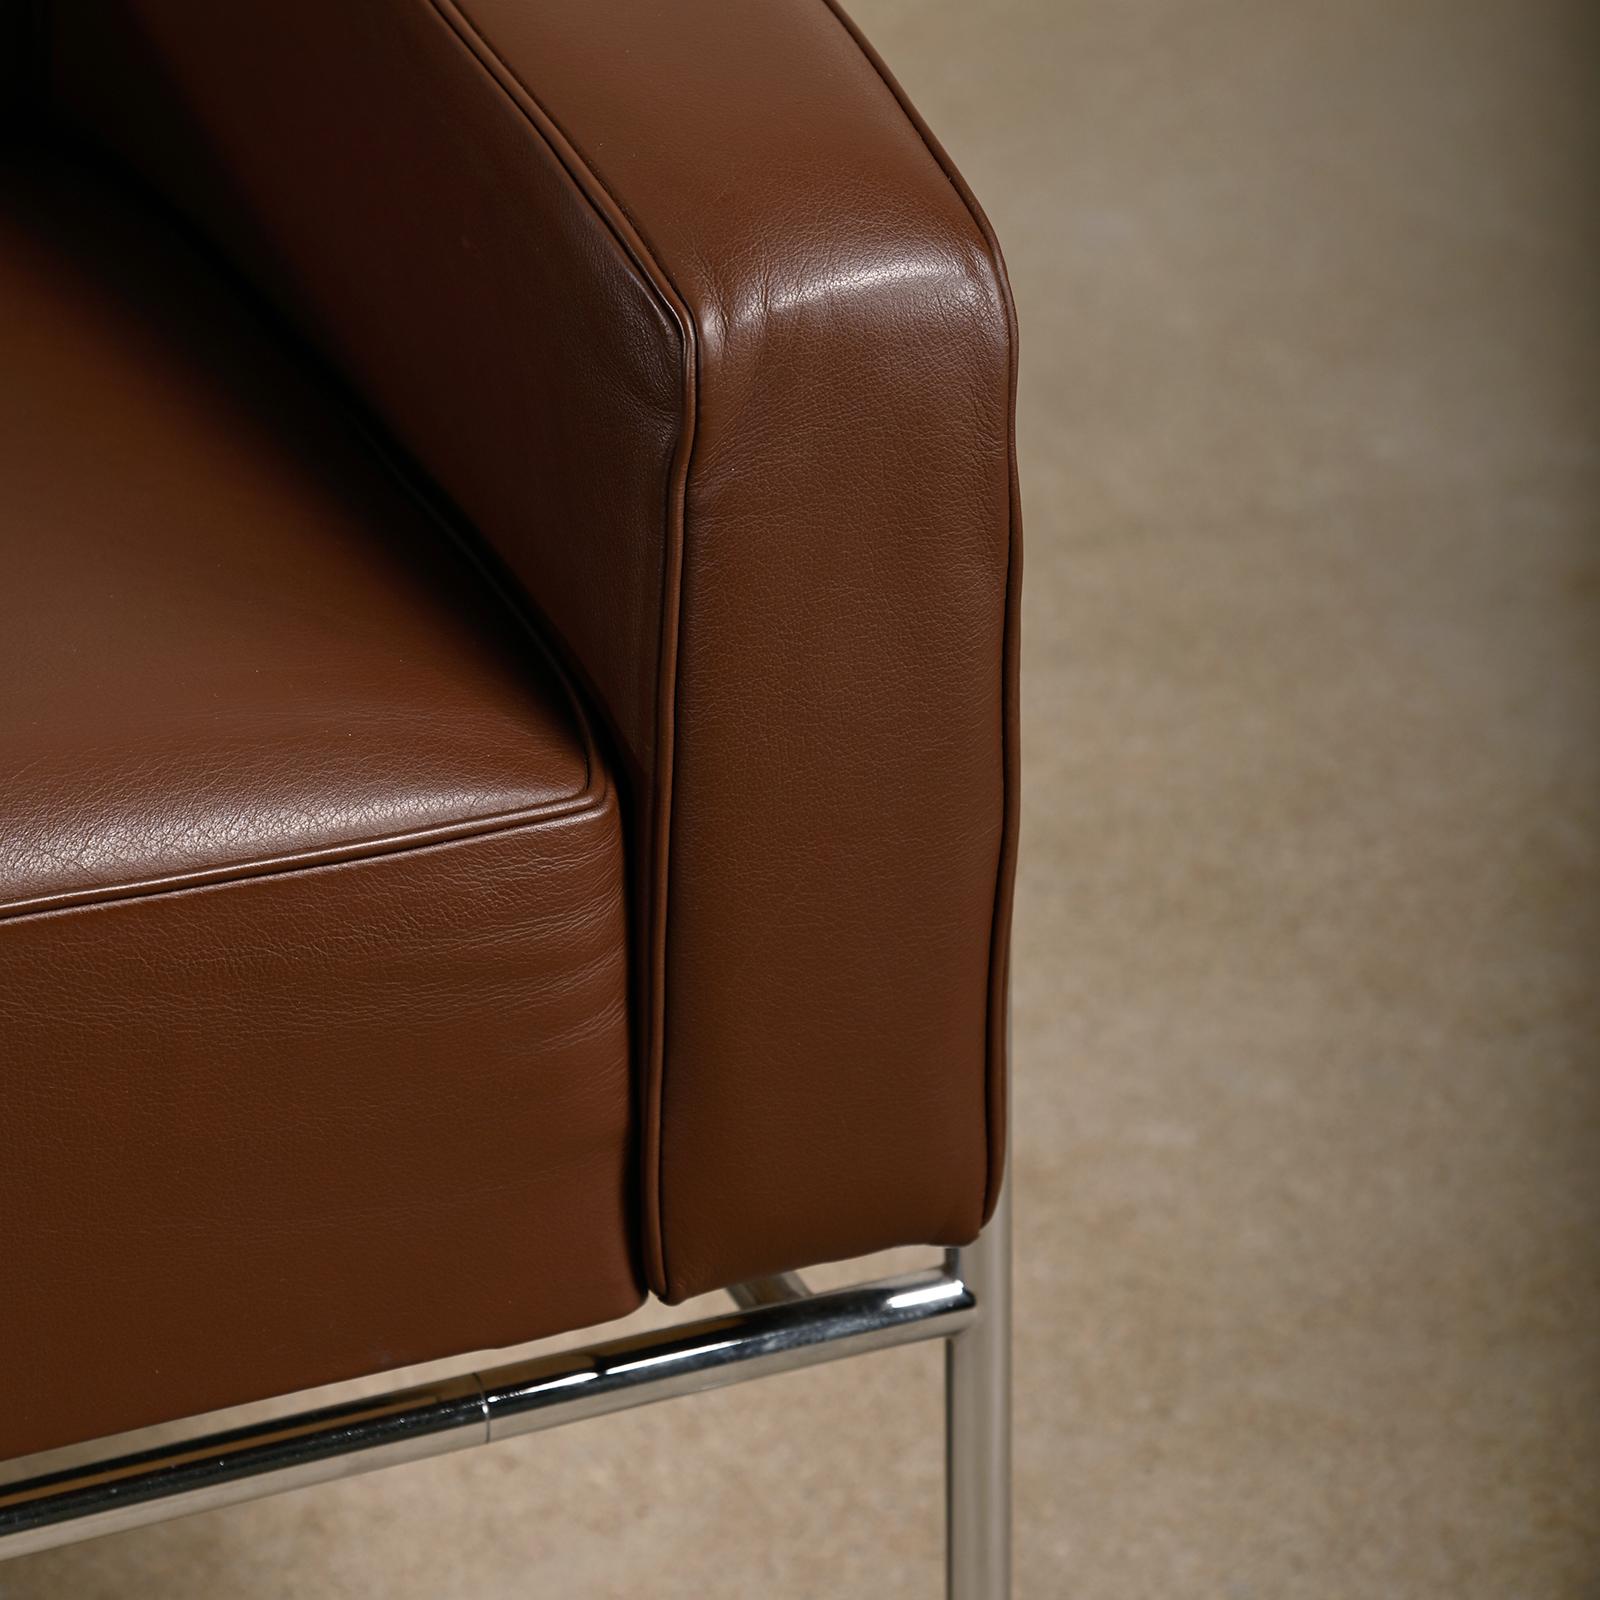 Arne Jacobsen Lounge Chair 3300 Series in Chestnut leather for Fritz Hansen For Sale 4